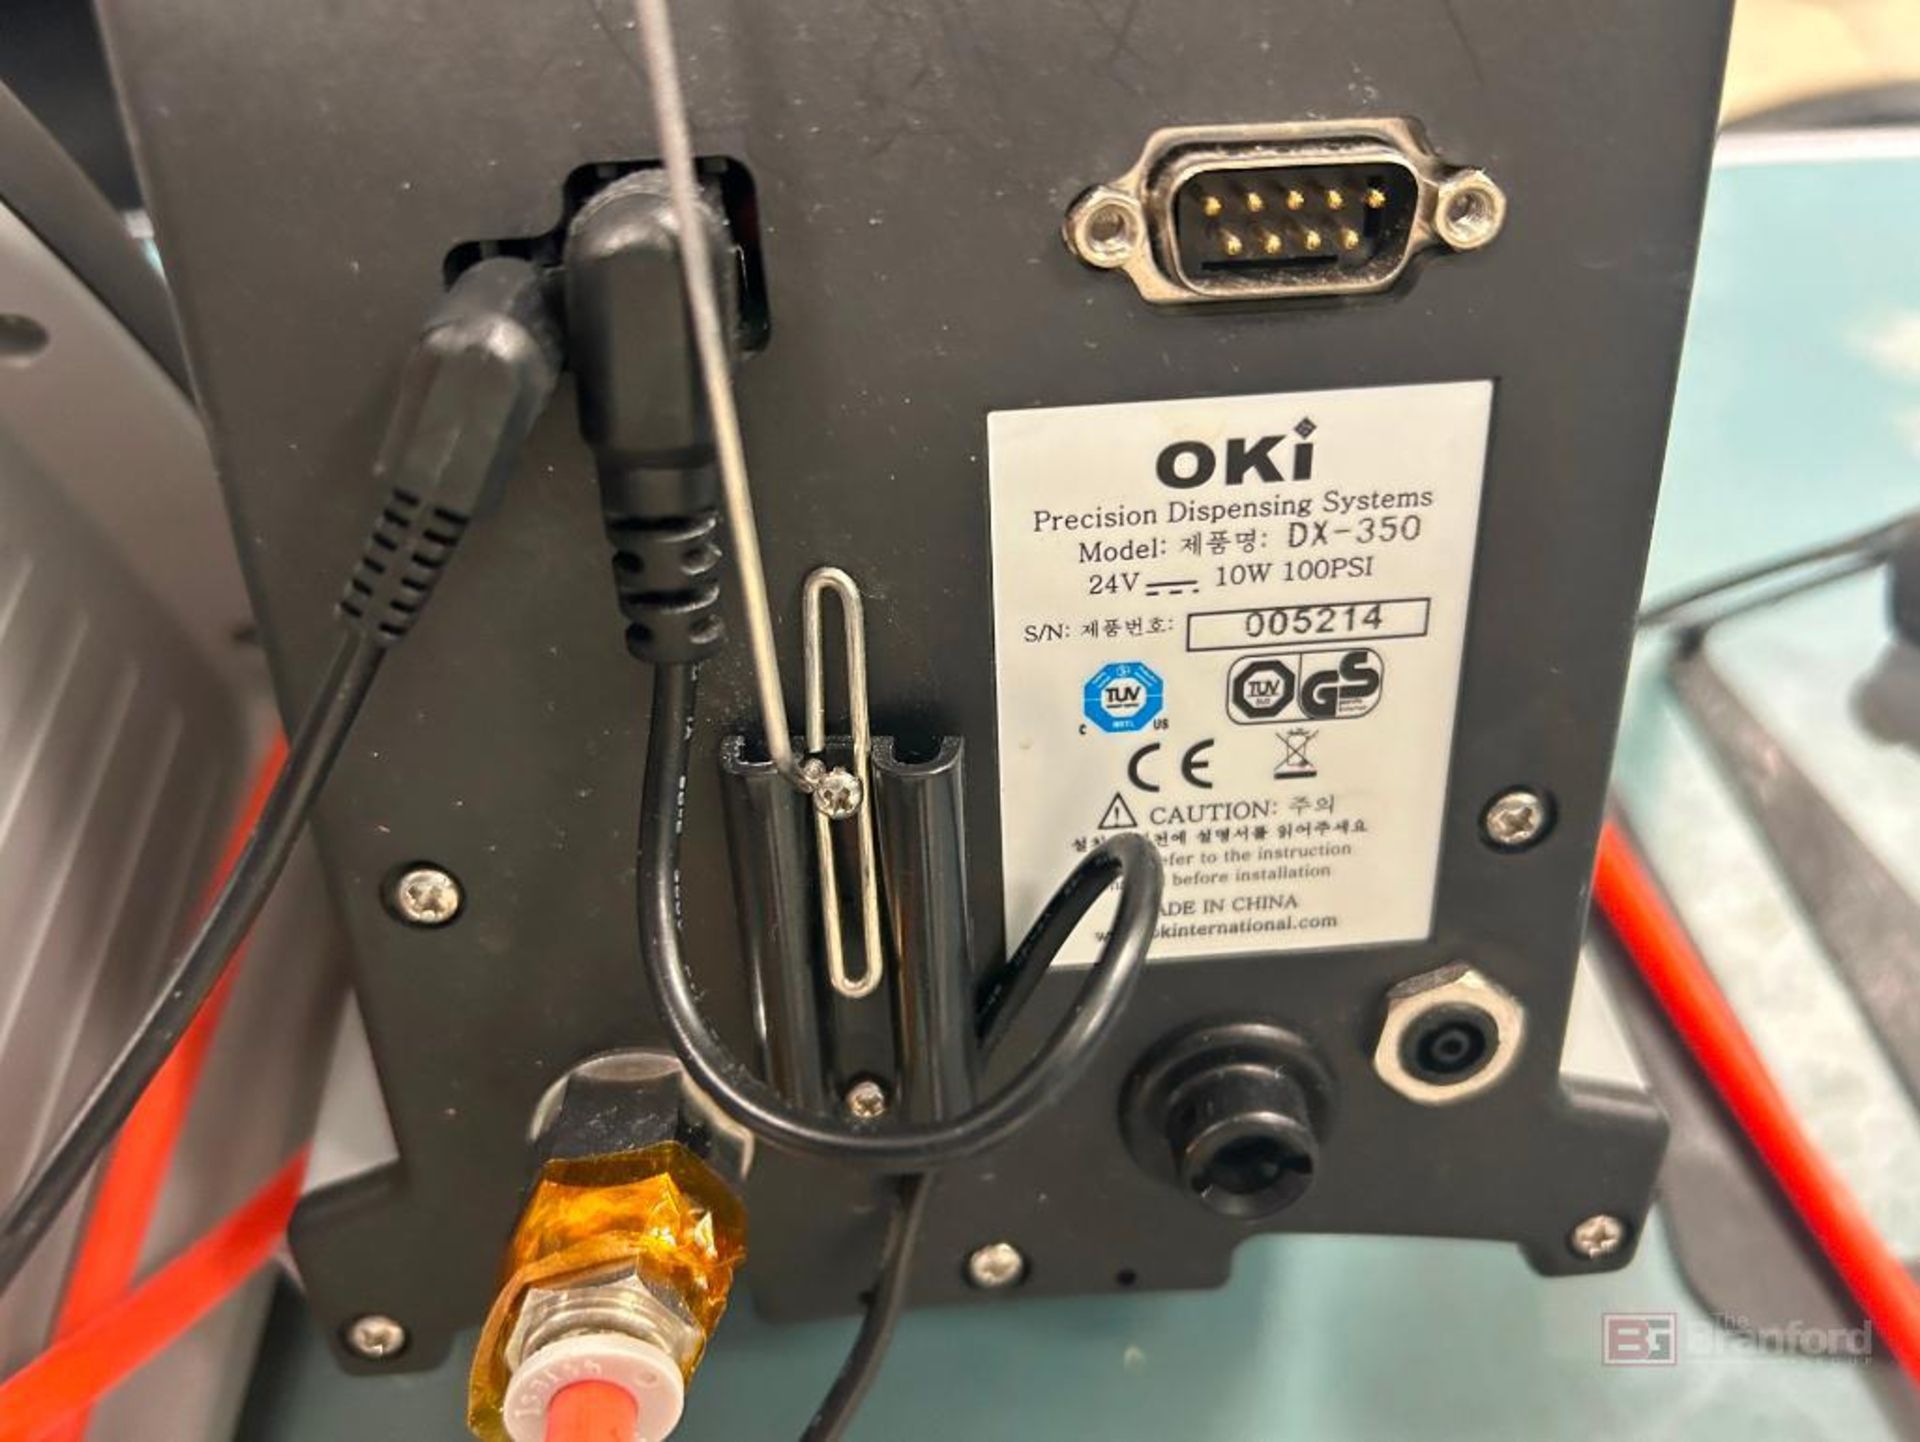 (2) Oki Precision Dispensing Systems; Model: DX-350 - Bild 3 aus 4